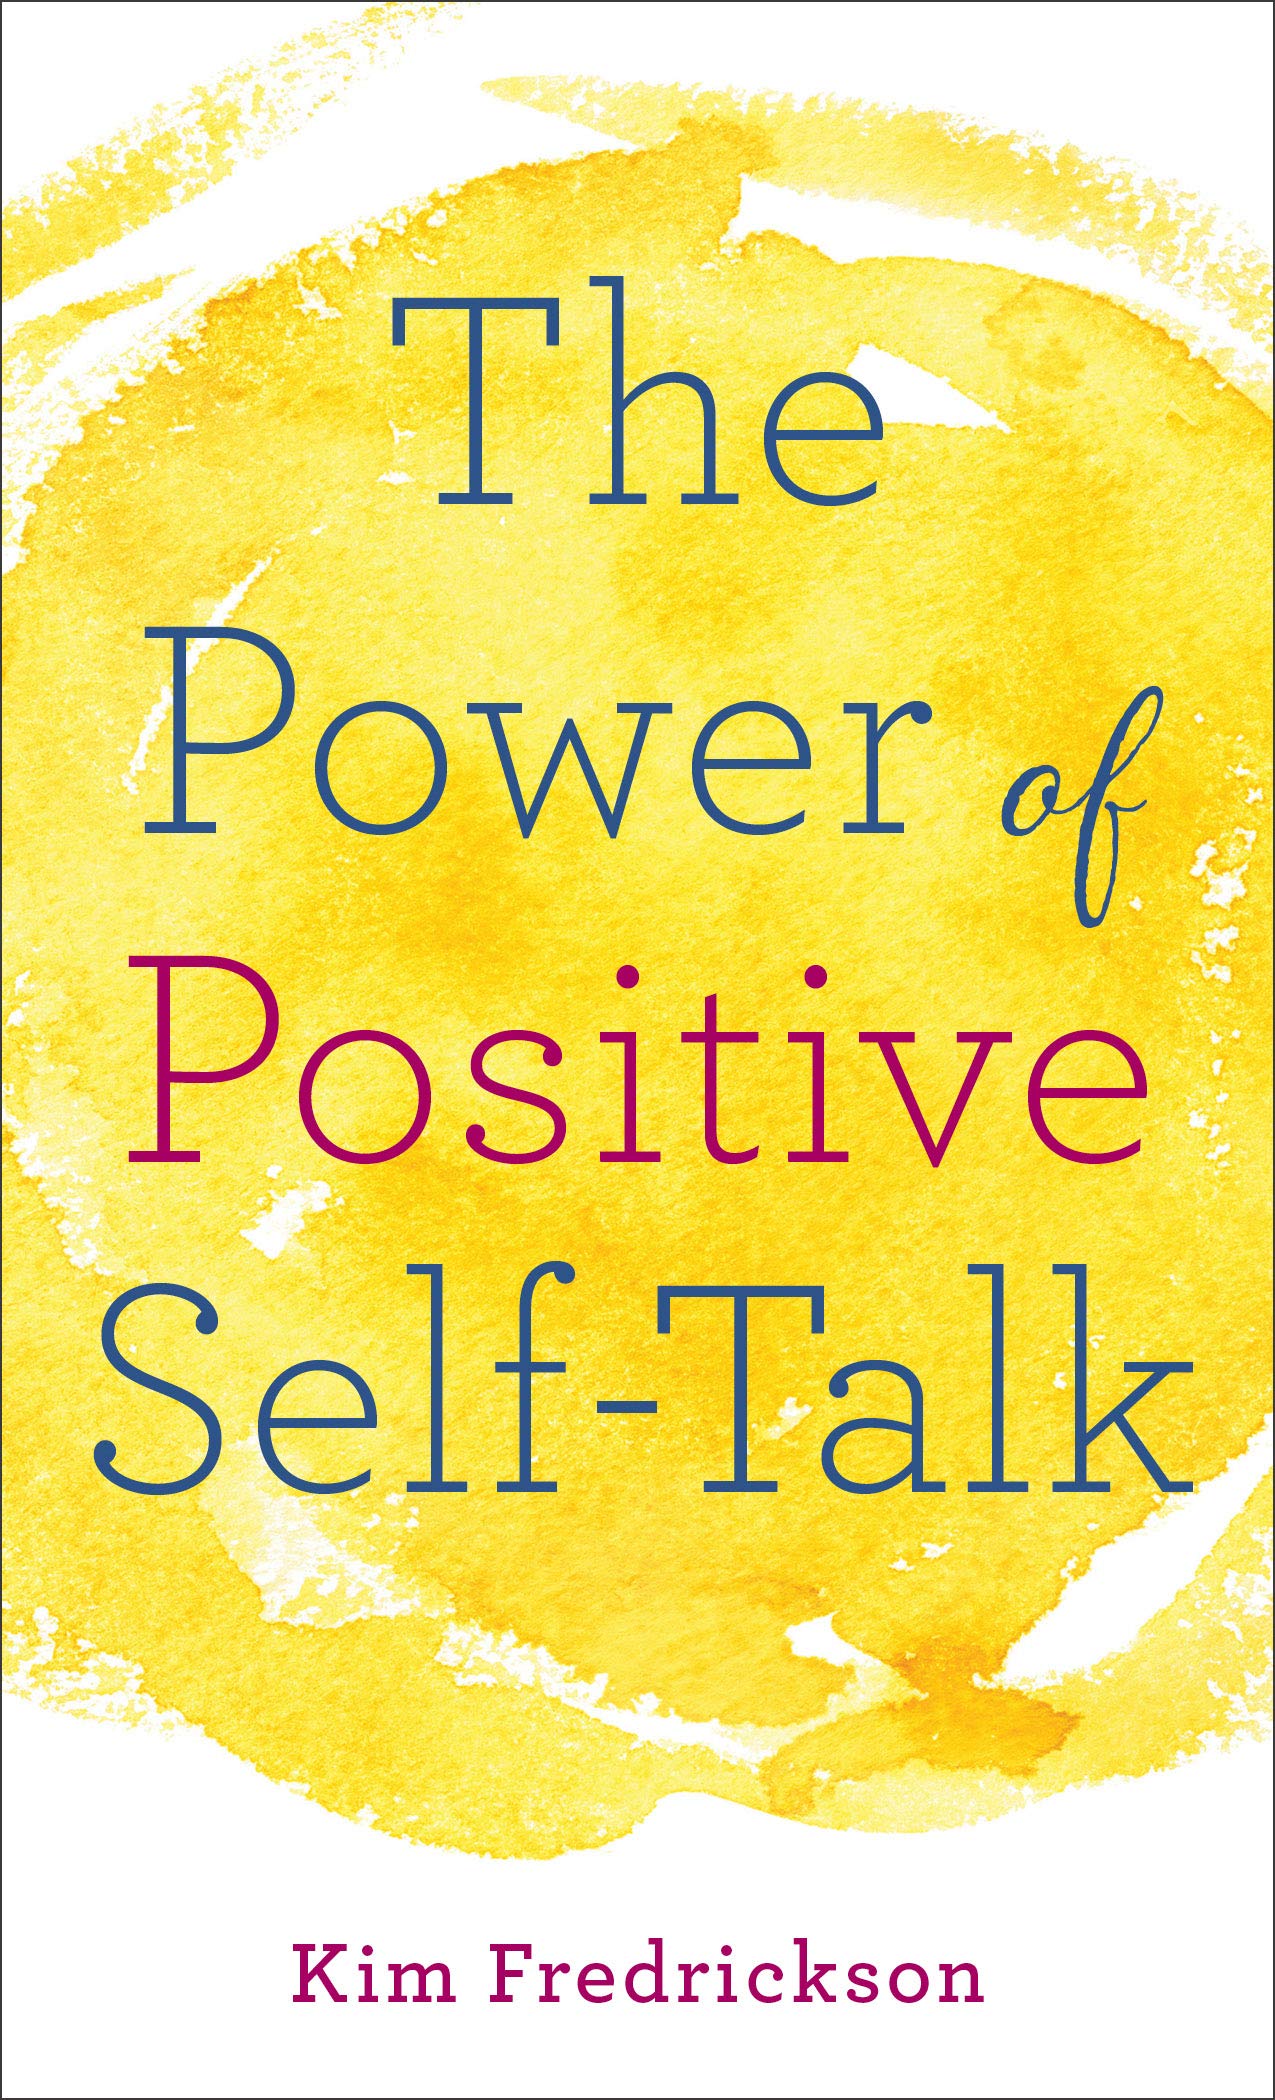 Book Cover - The Power of Positive Self-Talk by Kim Fredrickson (2015)